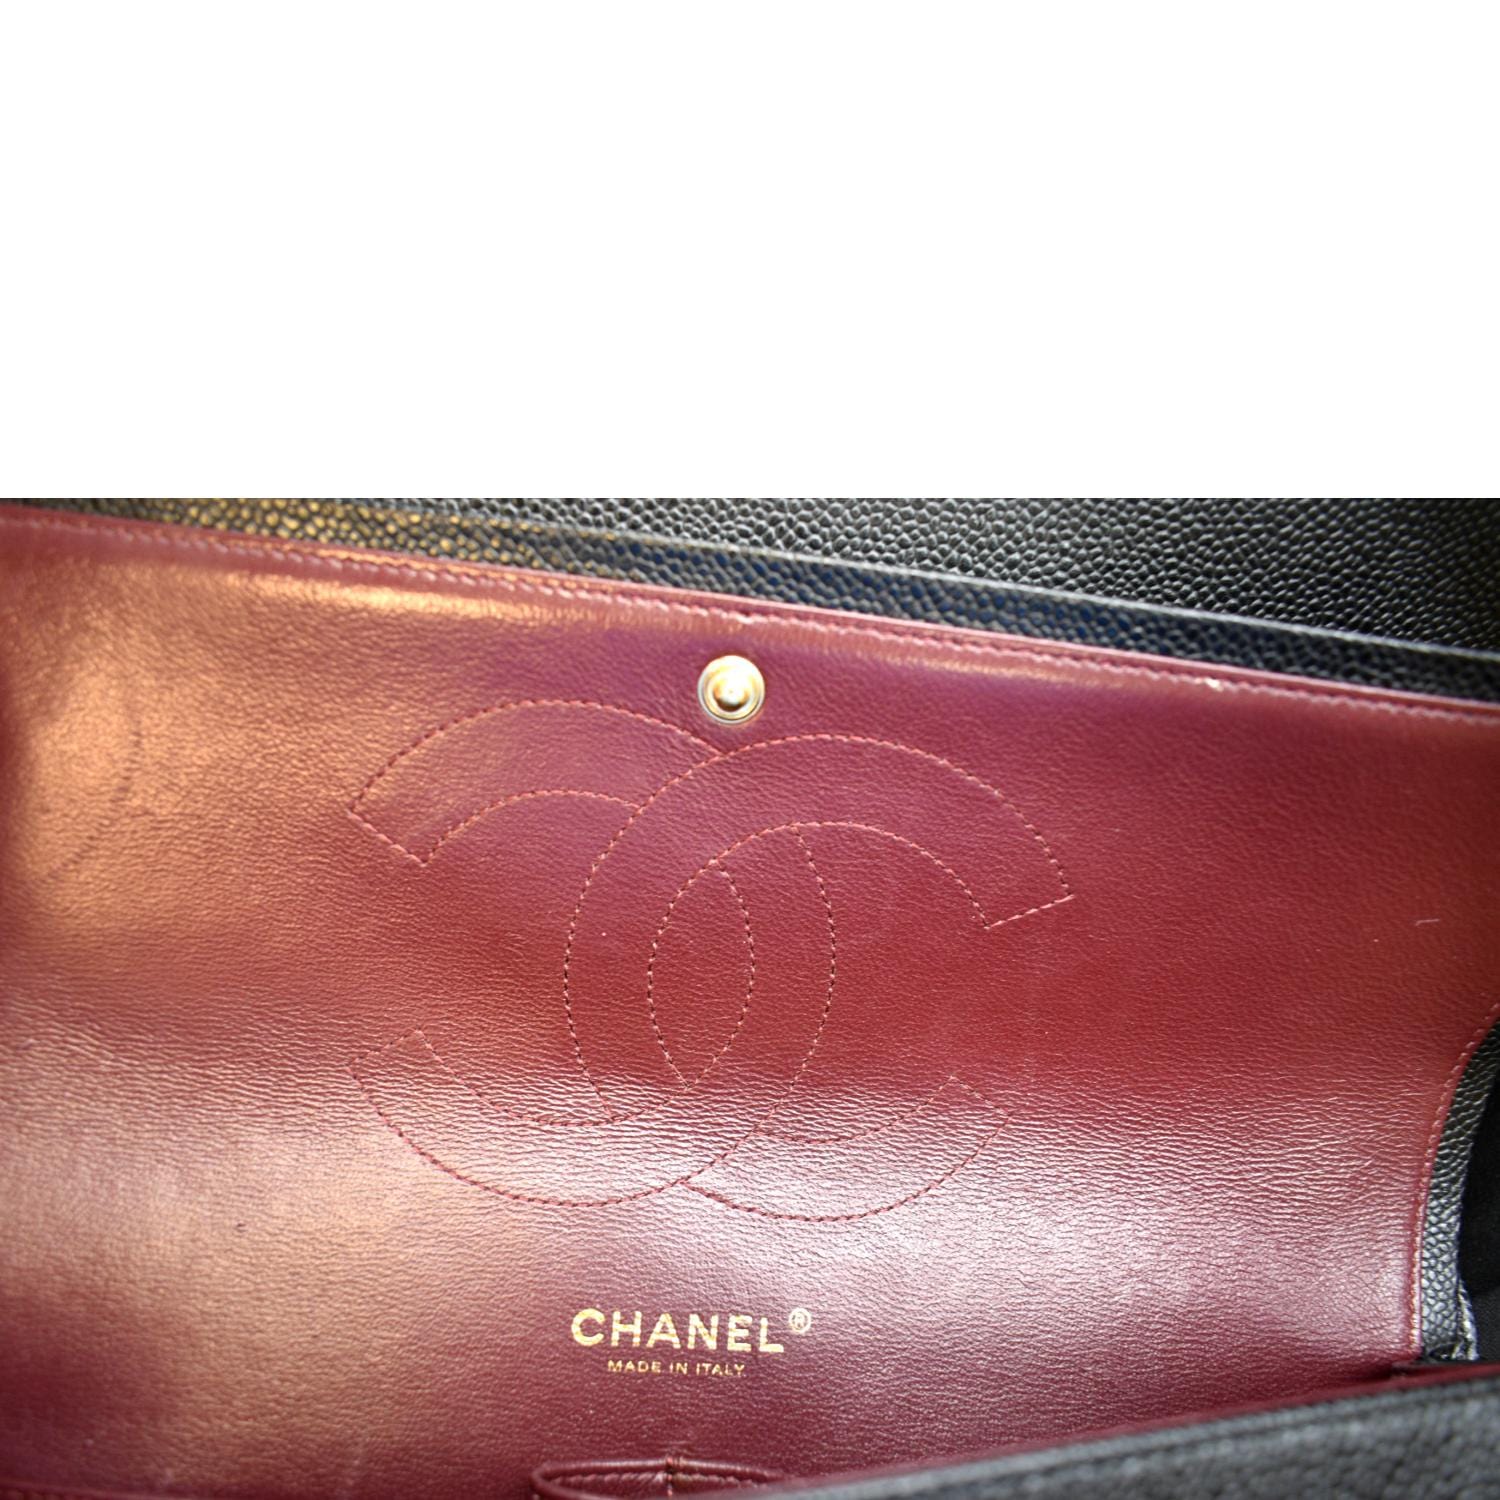 Red Chanel  Chanel classic jumbo, Chanel black classic, Stylish